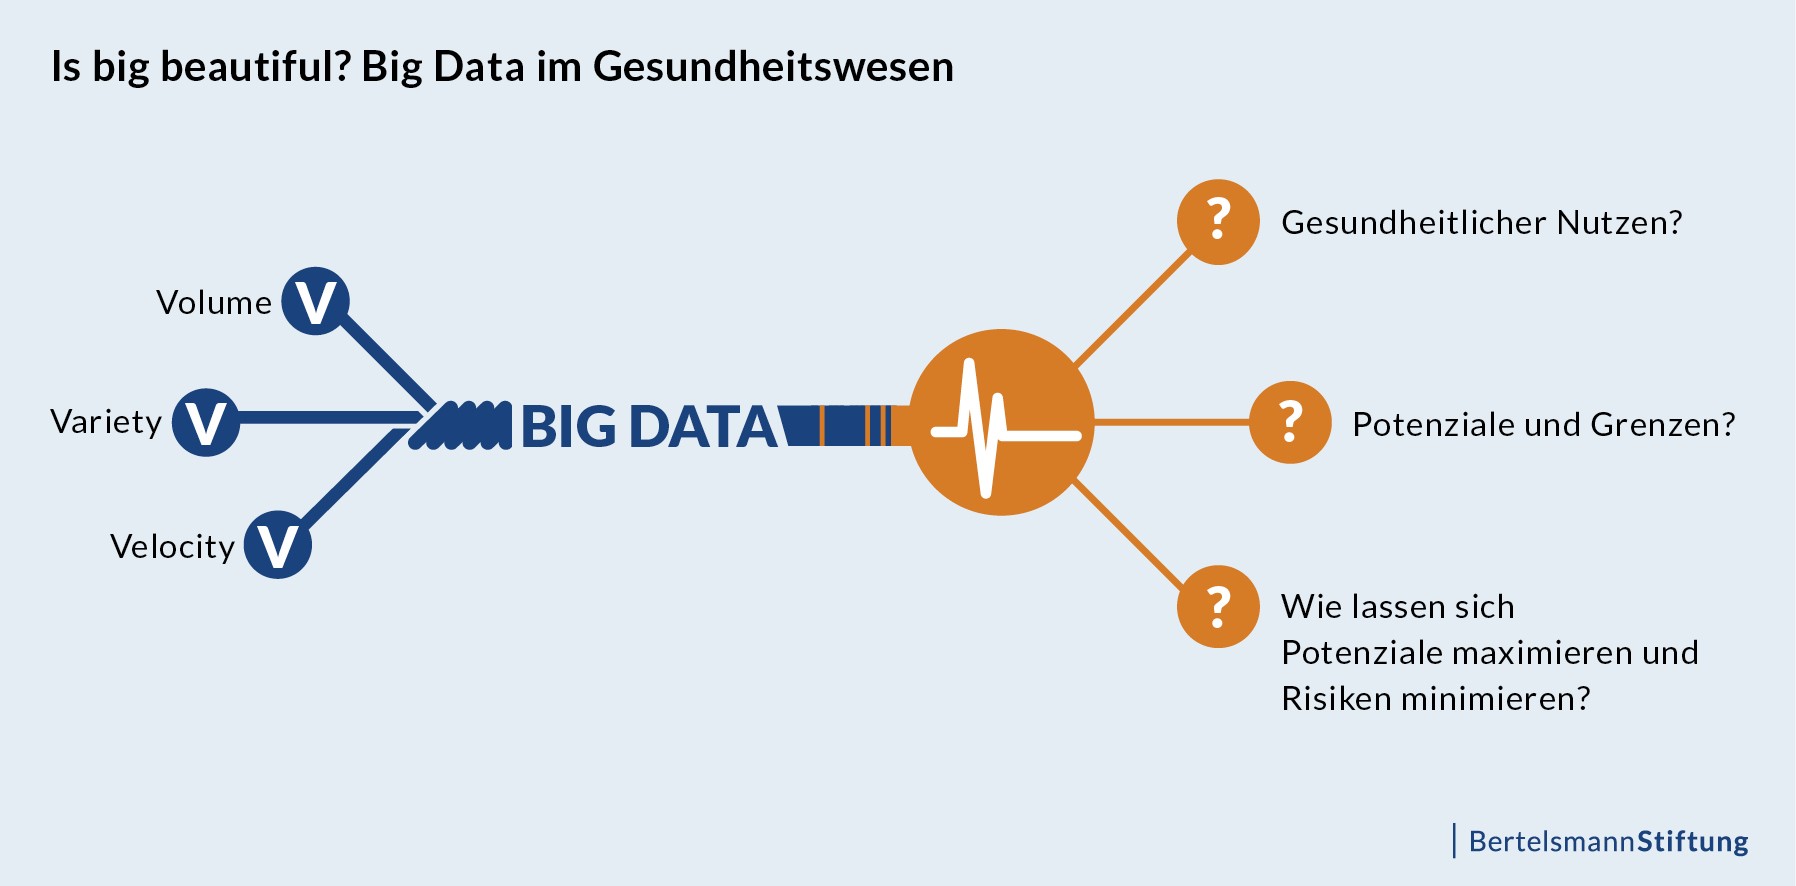 Is big beautiful? Big Data im Gesundheitswesen